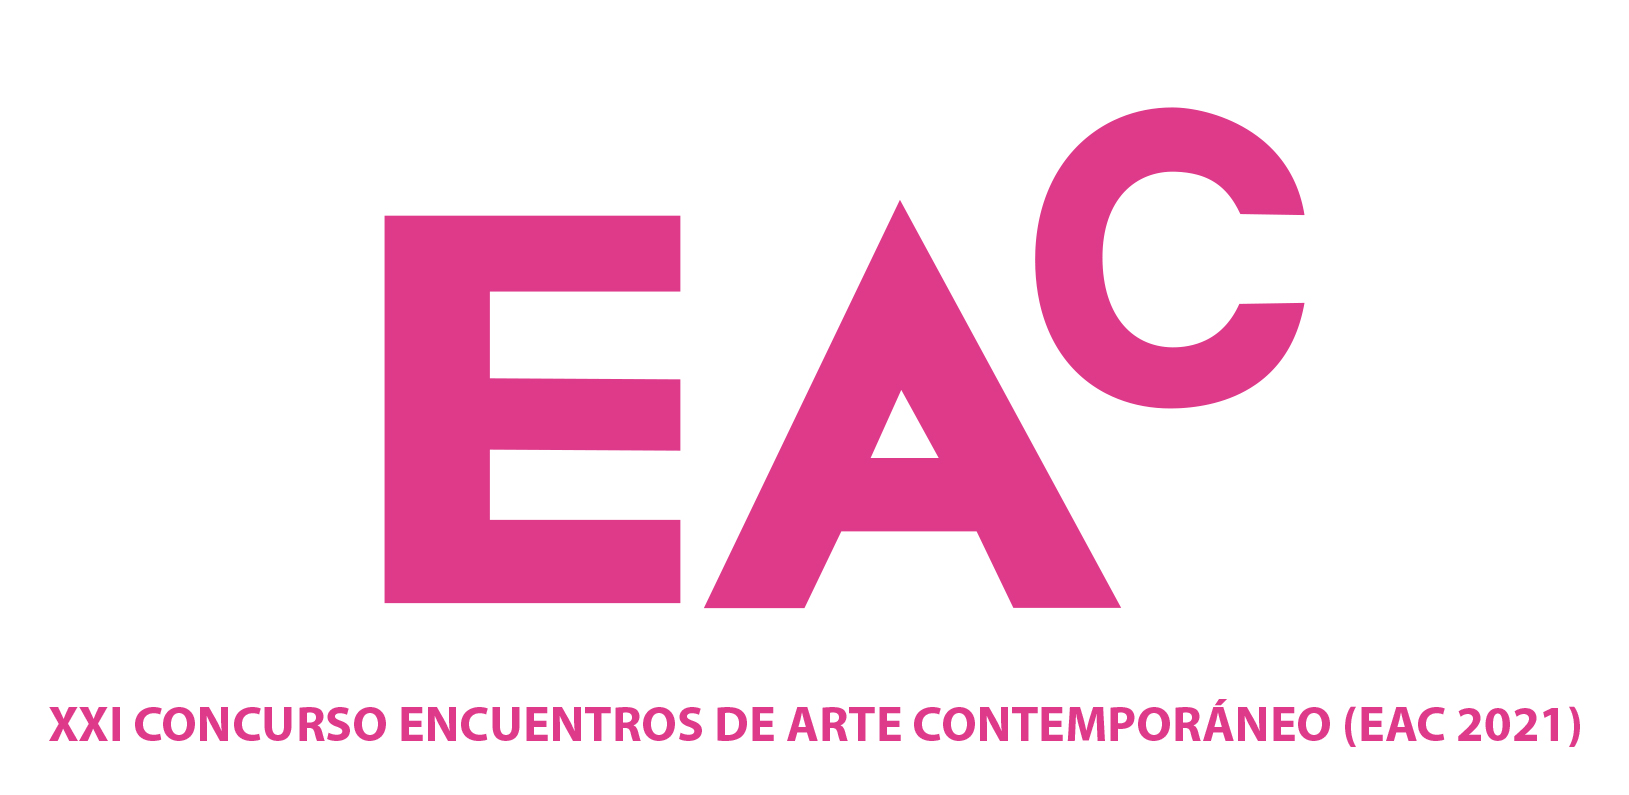 EAC 2021 - XXI Concurso de Encuentros de Arte Contemporáneo